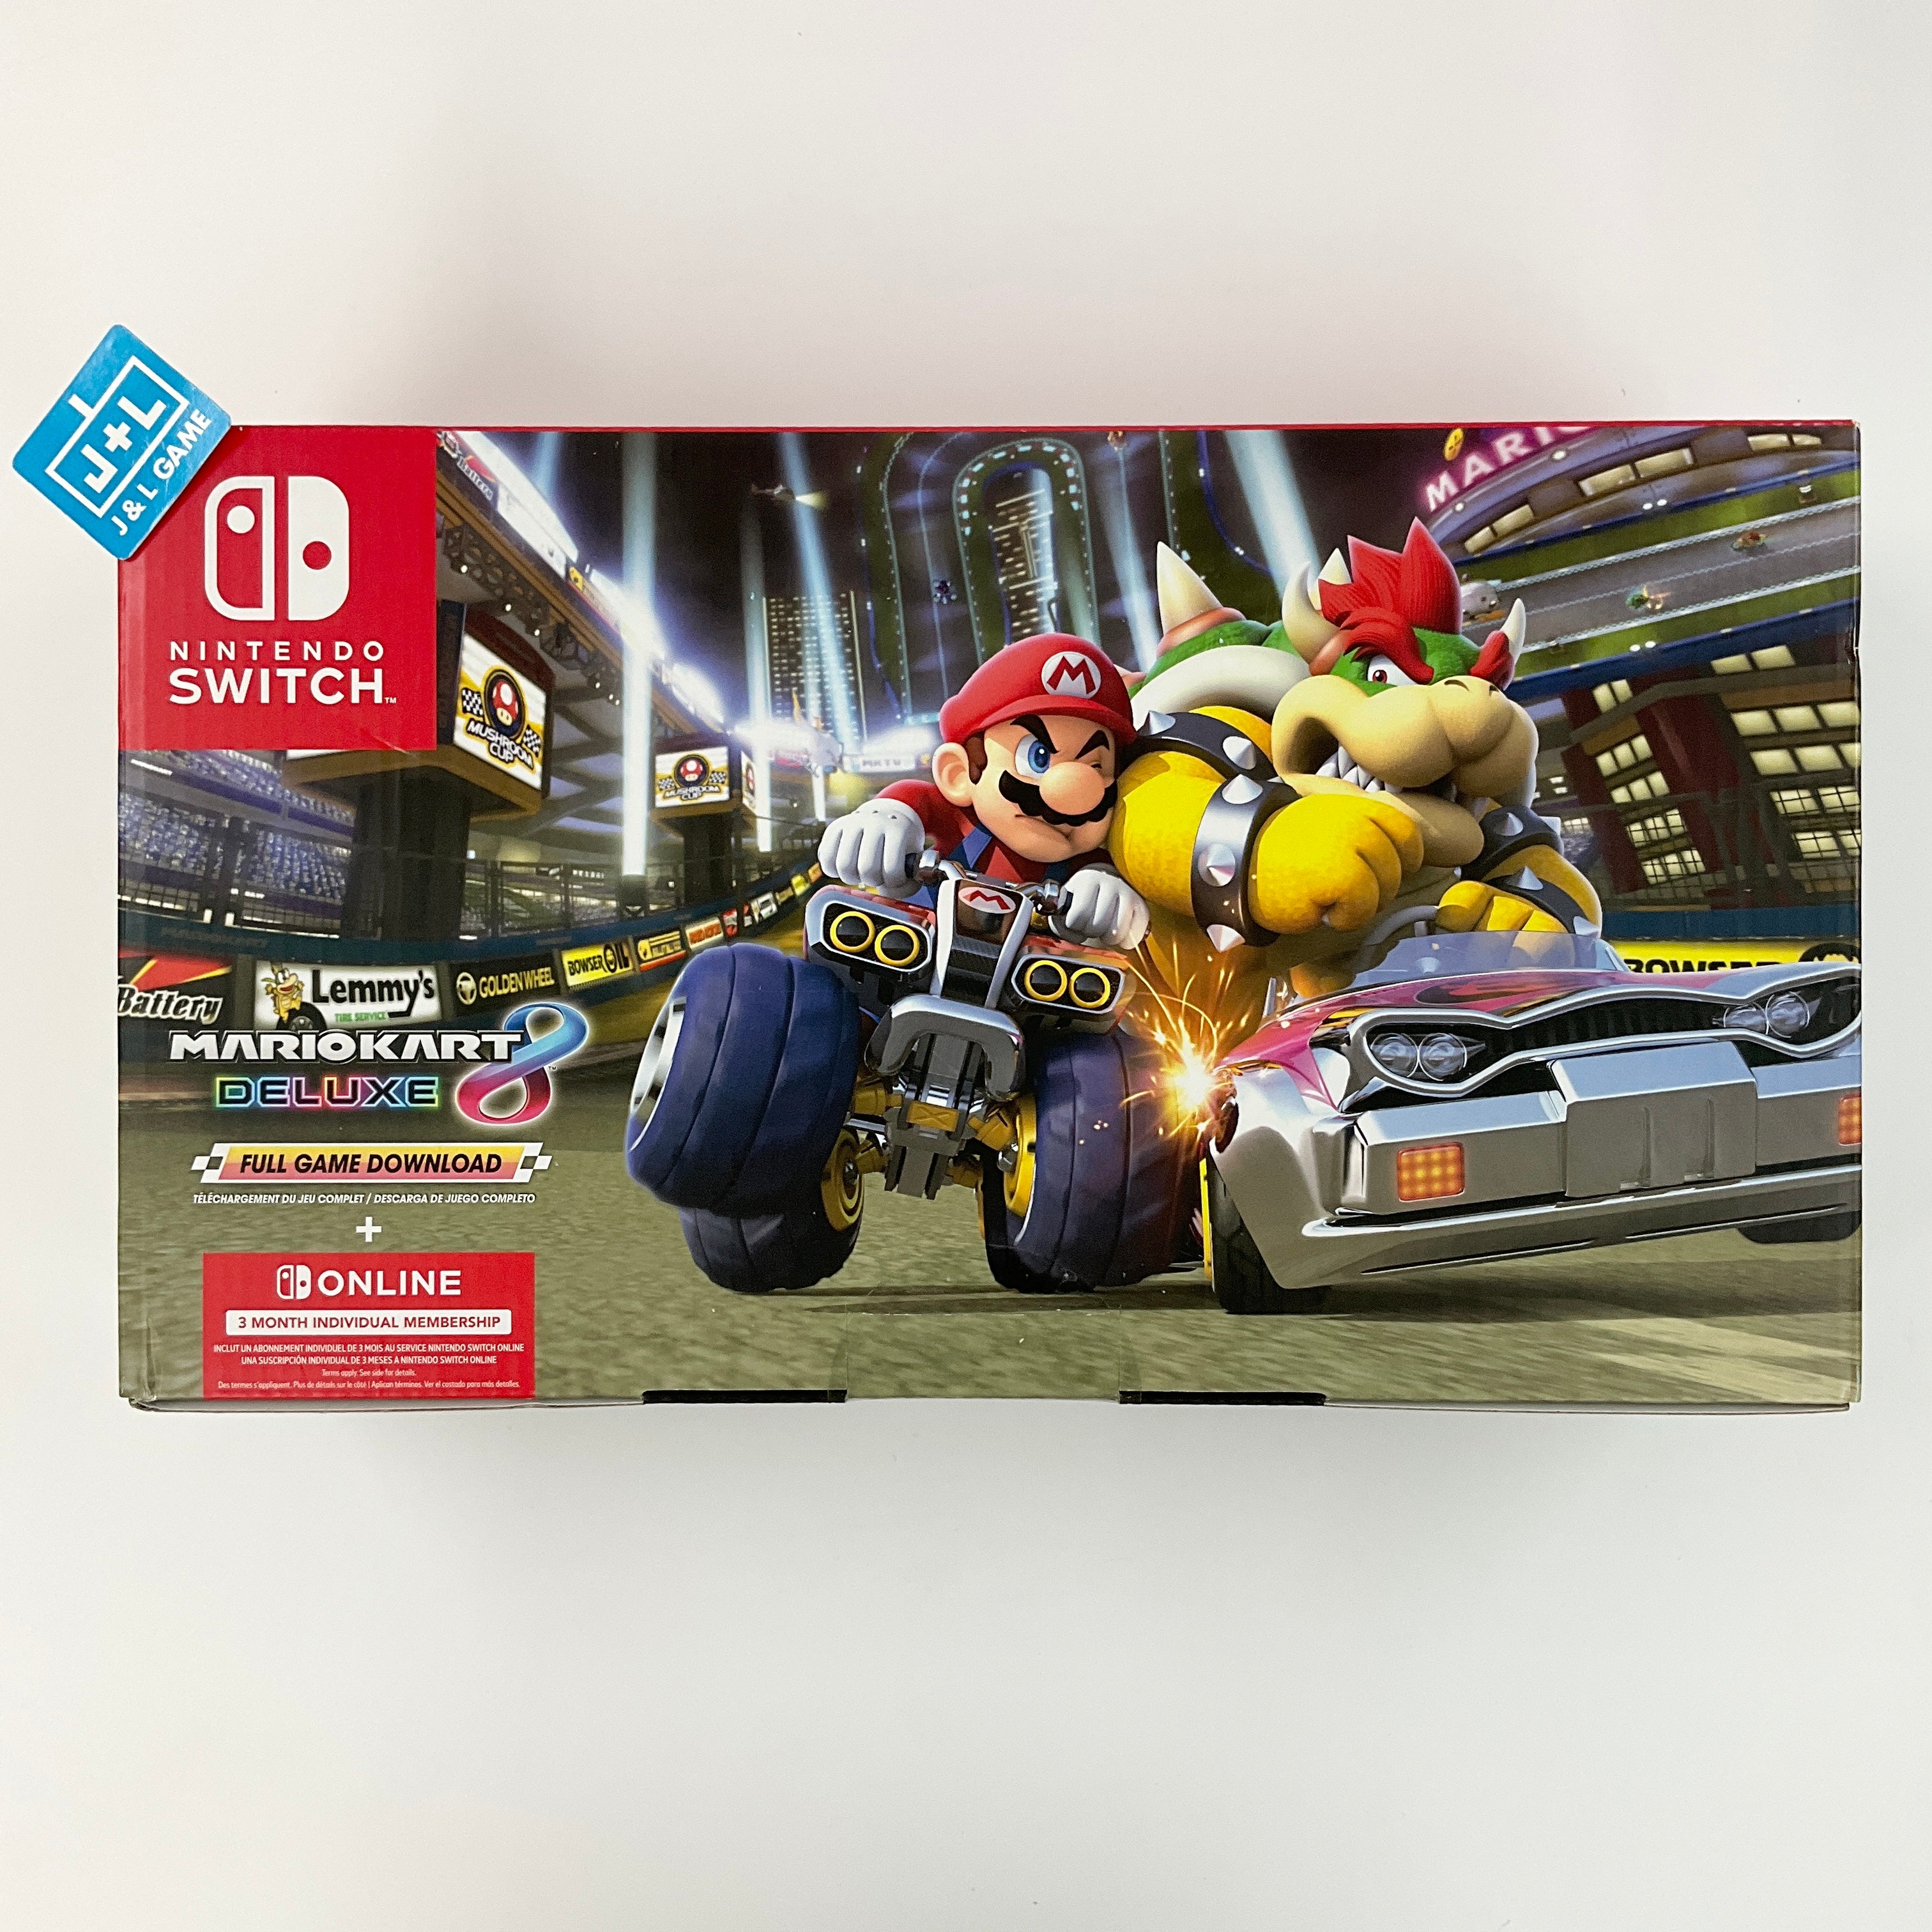 Nintendo Switch w/ Neon Blue & Neon Red Joy-Con + Mario Kart 8 Deluxe (Full Game Download) - Nintendo Switch Consoles Nintendo   